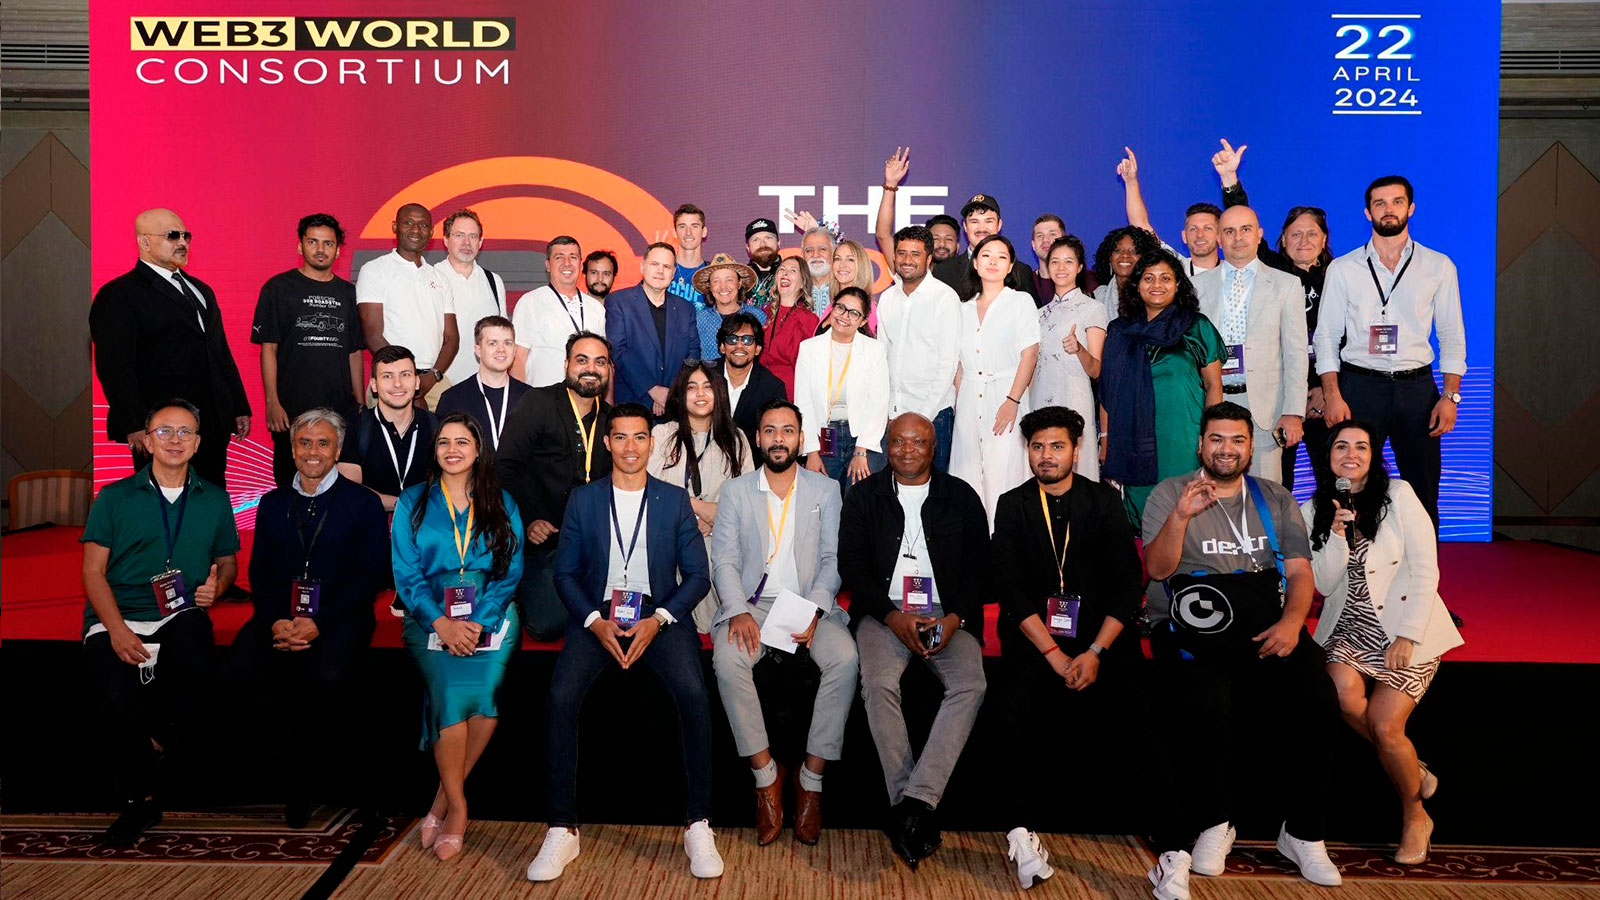 Dubai’s W3WC Event: Where Web3 Visionaries Converge and Triumph